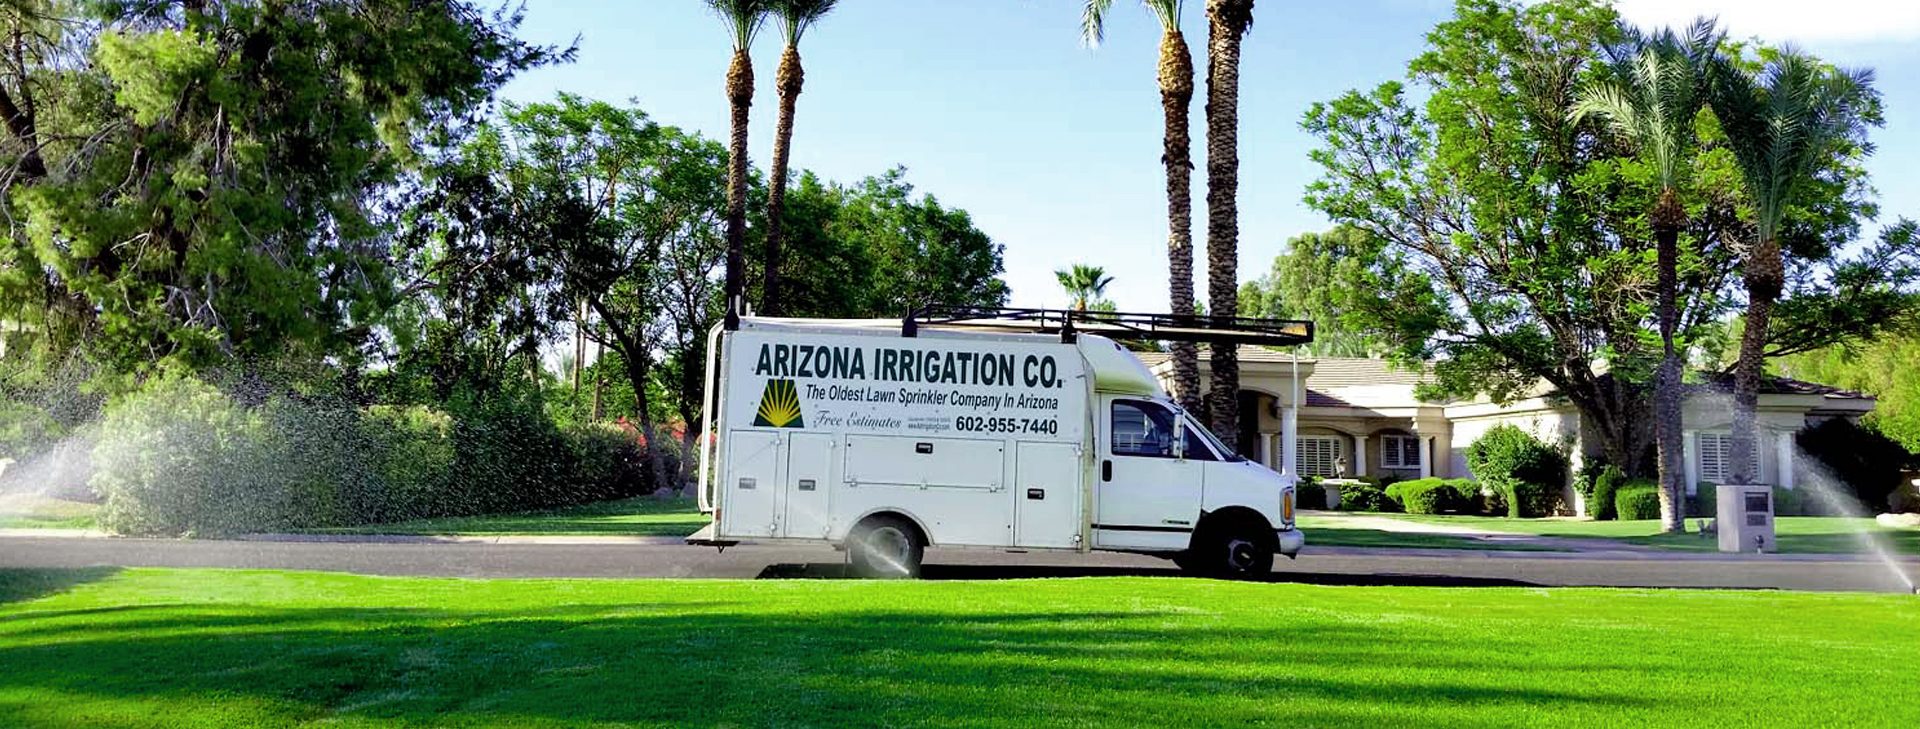 arizona sprinkler repair service Arizona Irrigation Company